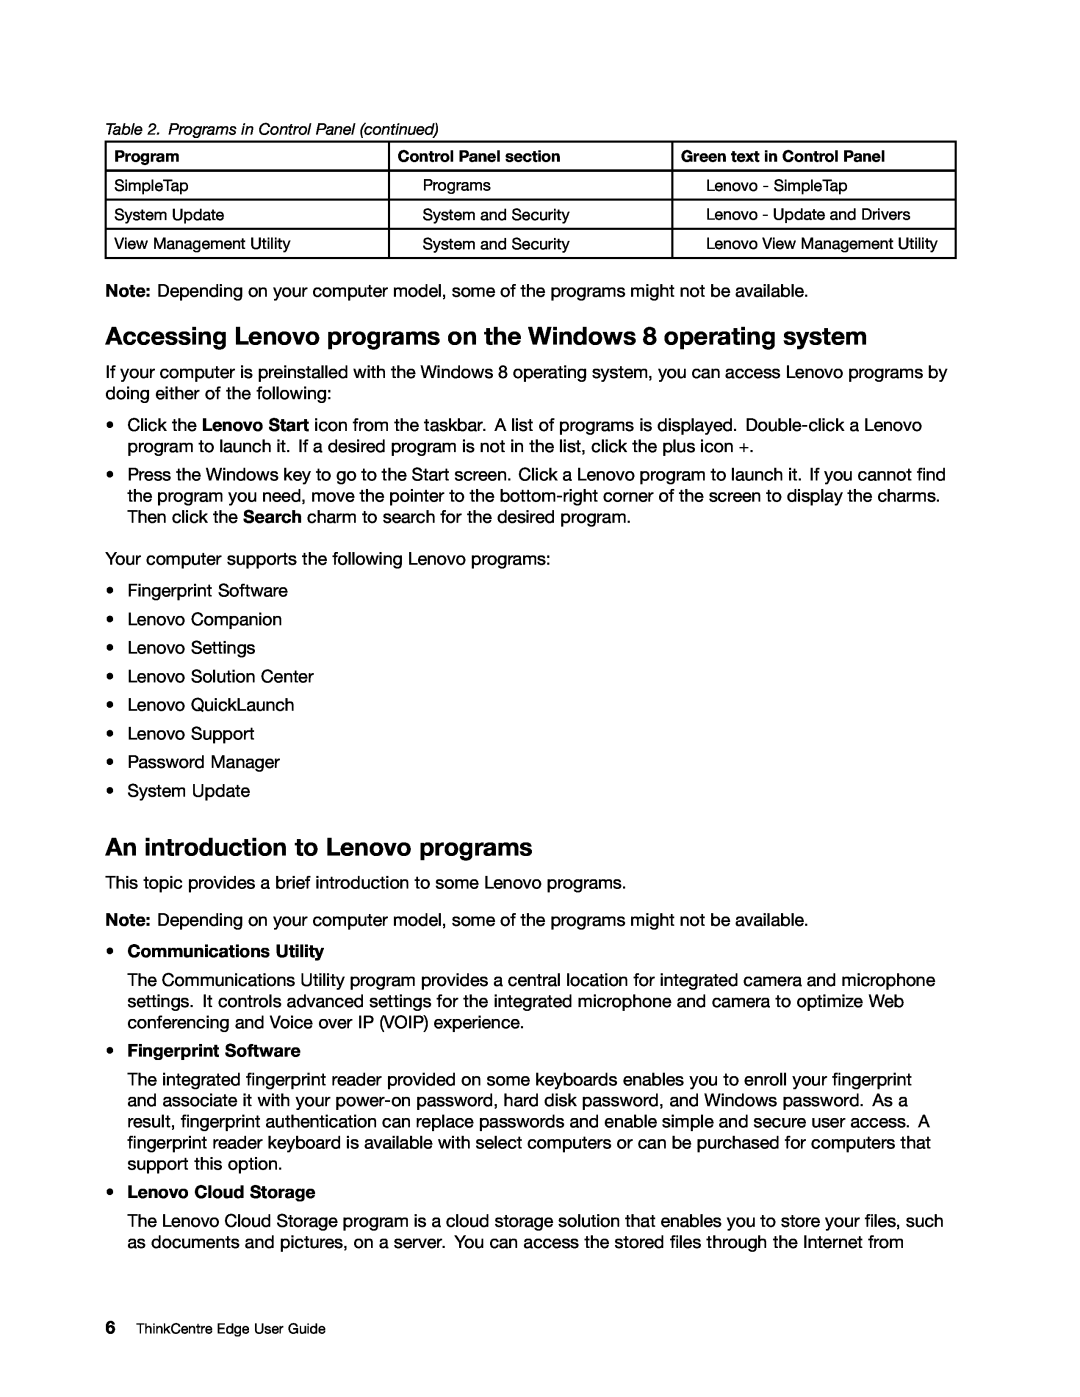 Lenovo 3426, 3398, 3397 Accessing Lenovo programs on the Windows 8 operating system, An introduction to Lenovo programs 